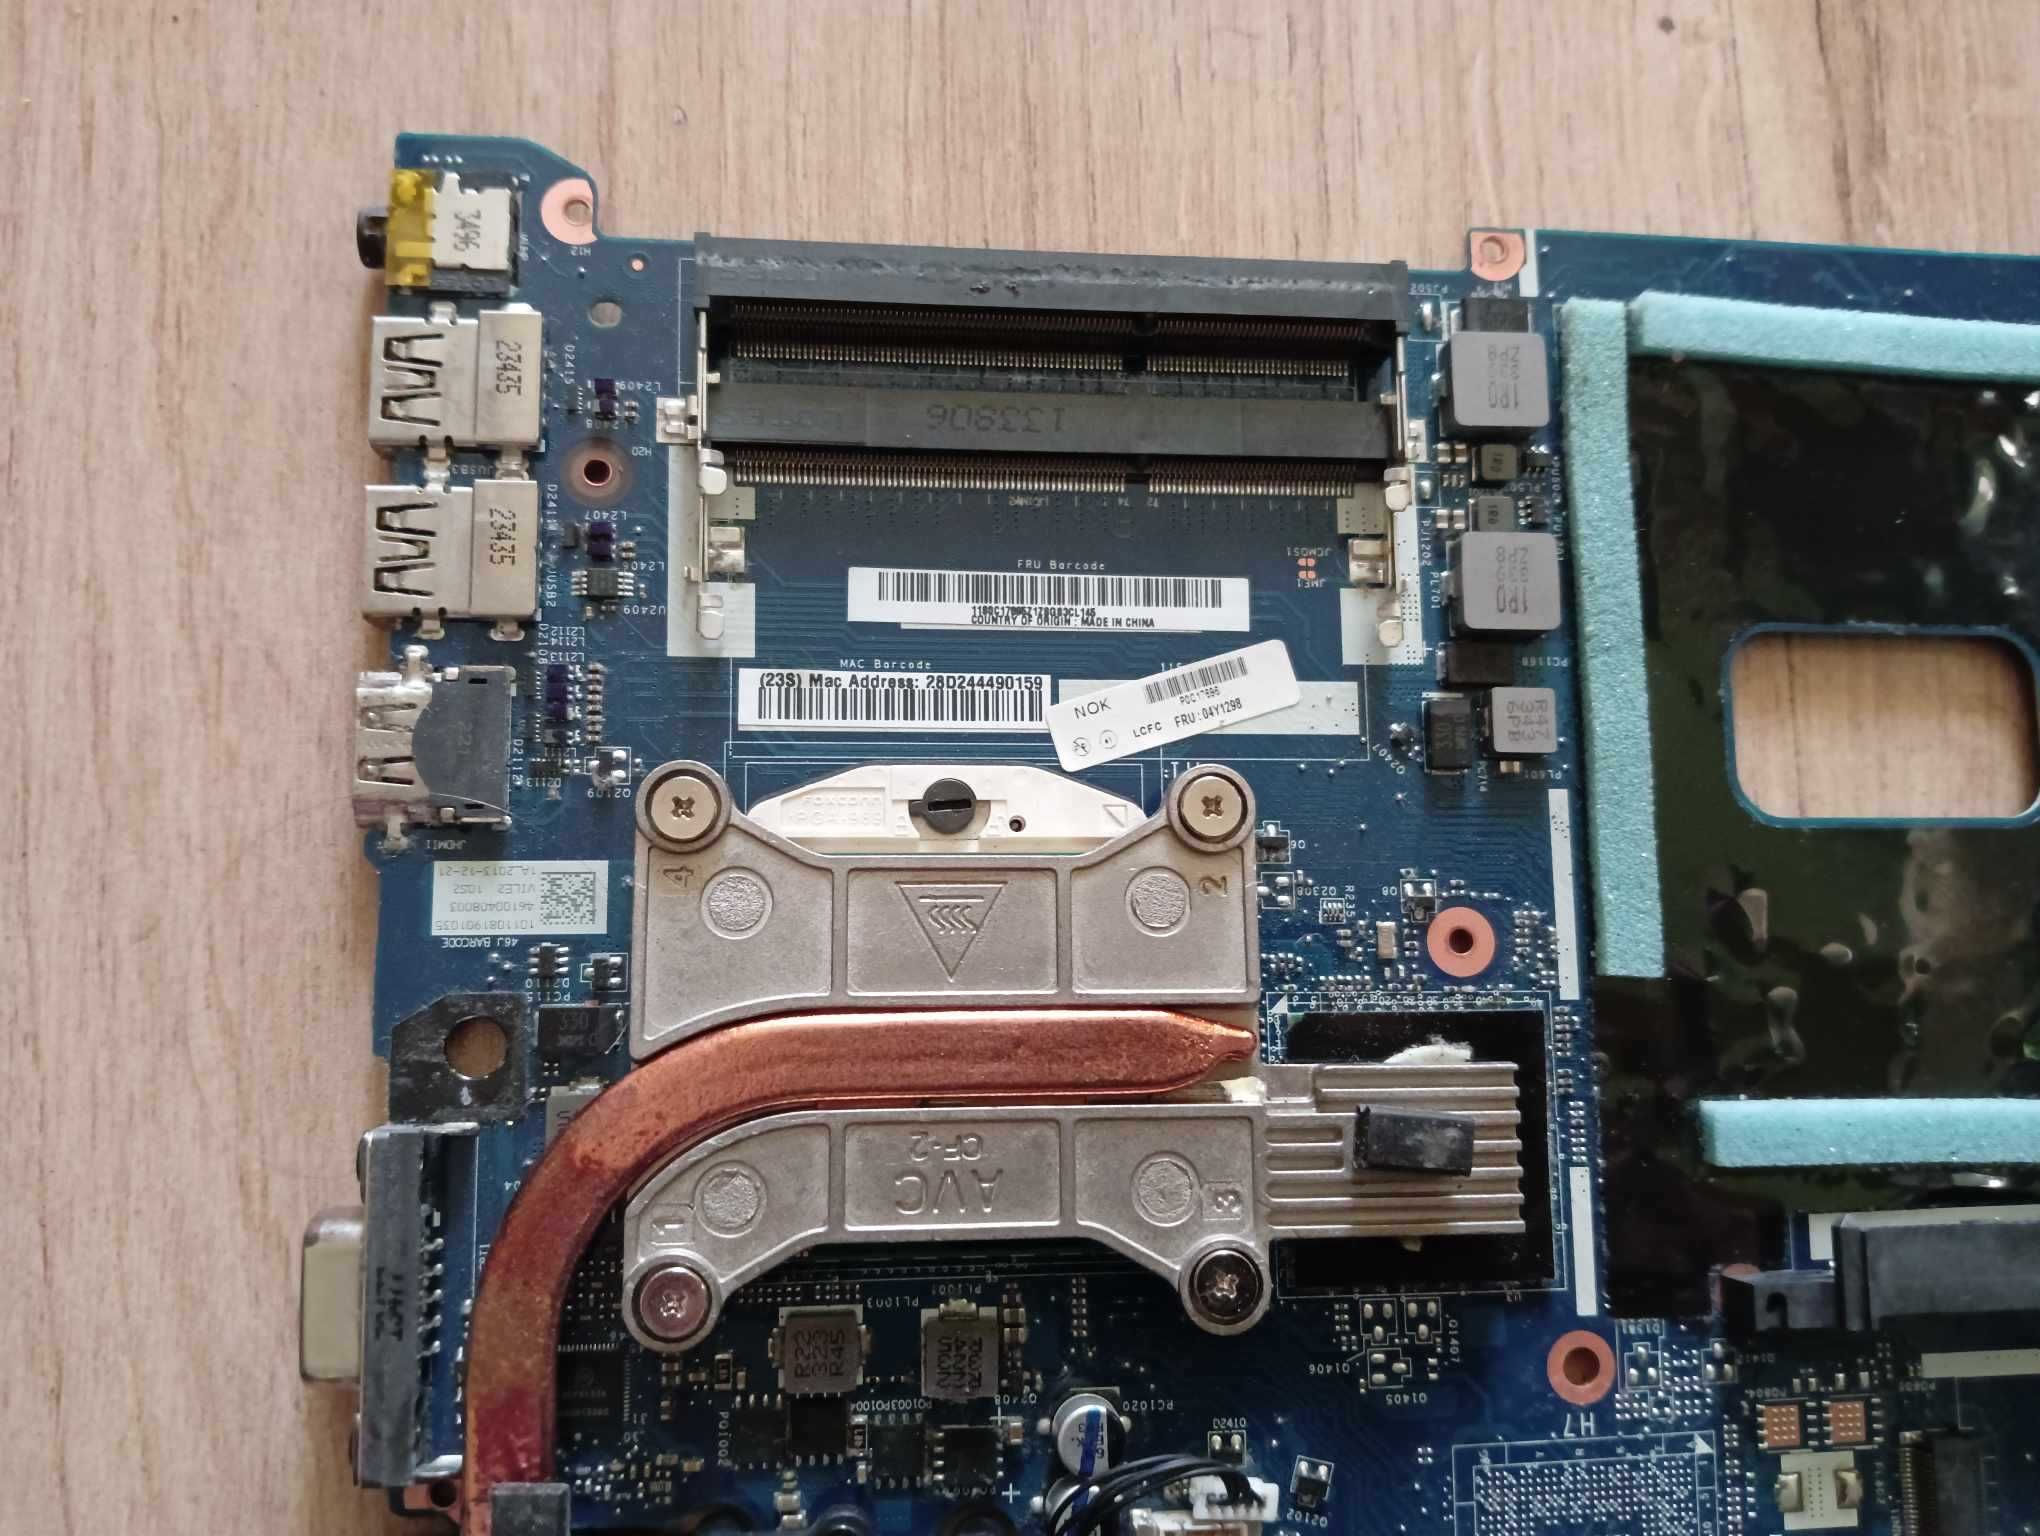 Płyta główna Lenovo E531, E540 NM-A044 GPU Intel + i3 3110M SPRAWNA